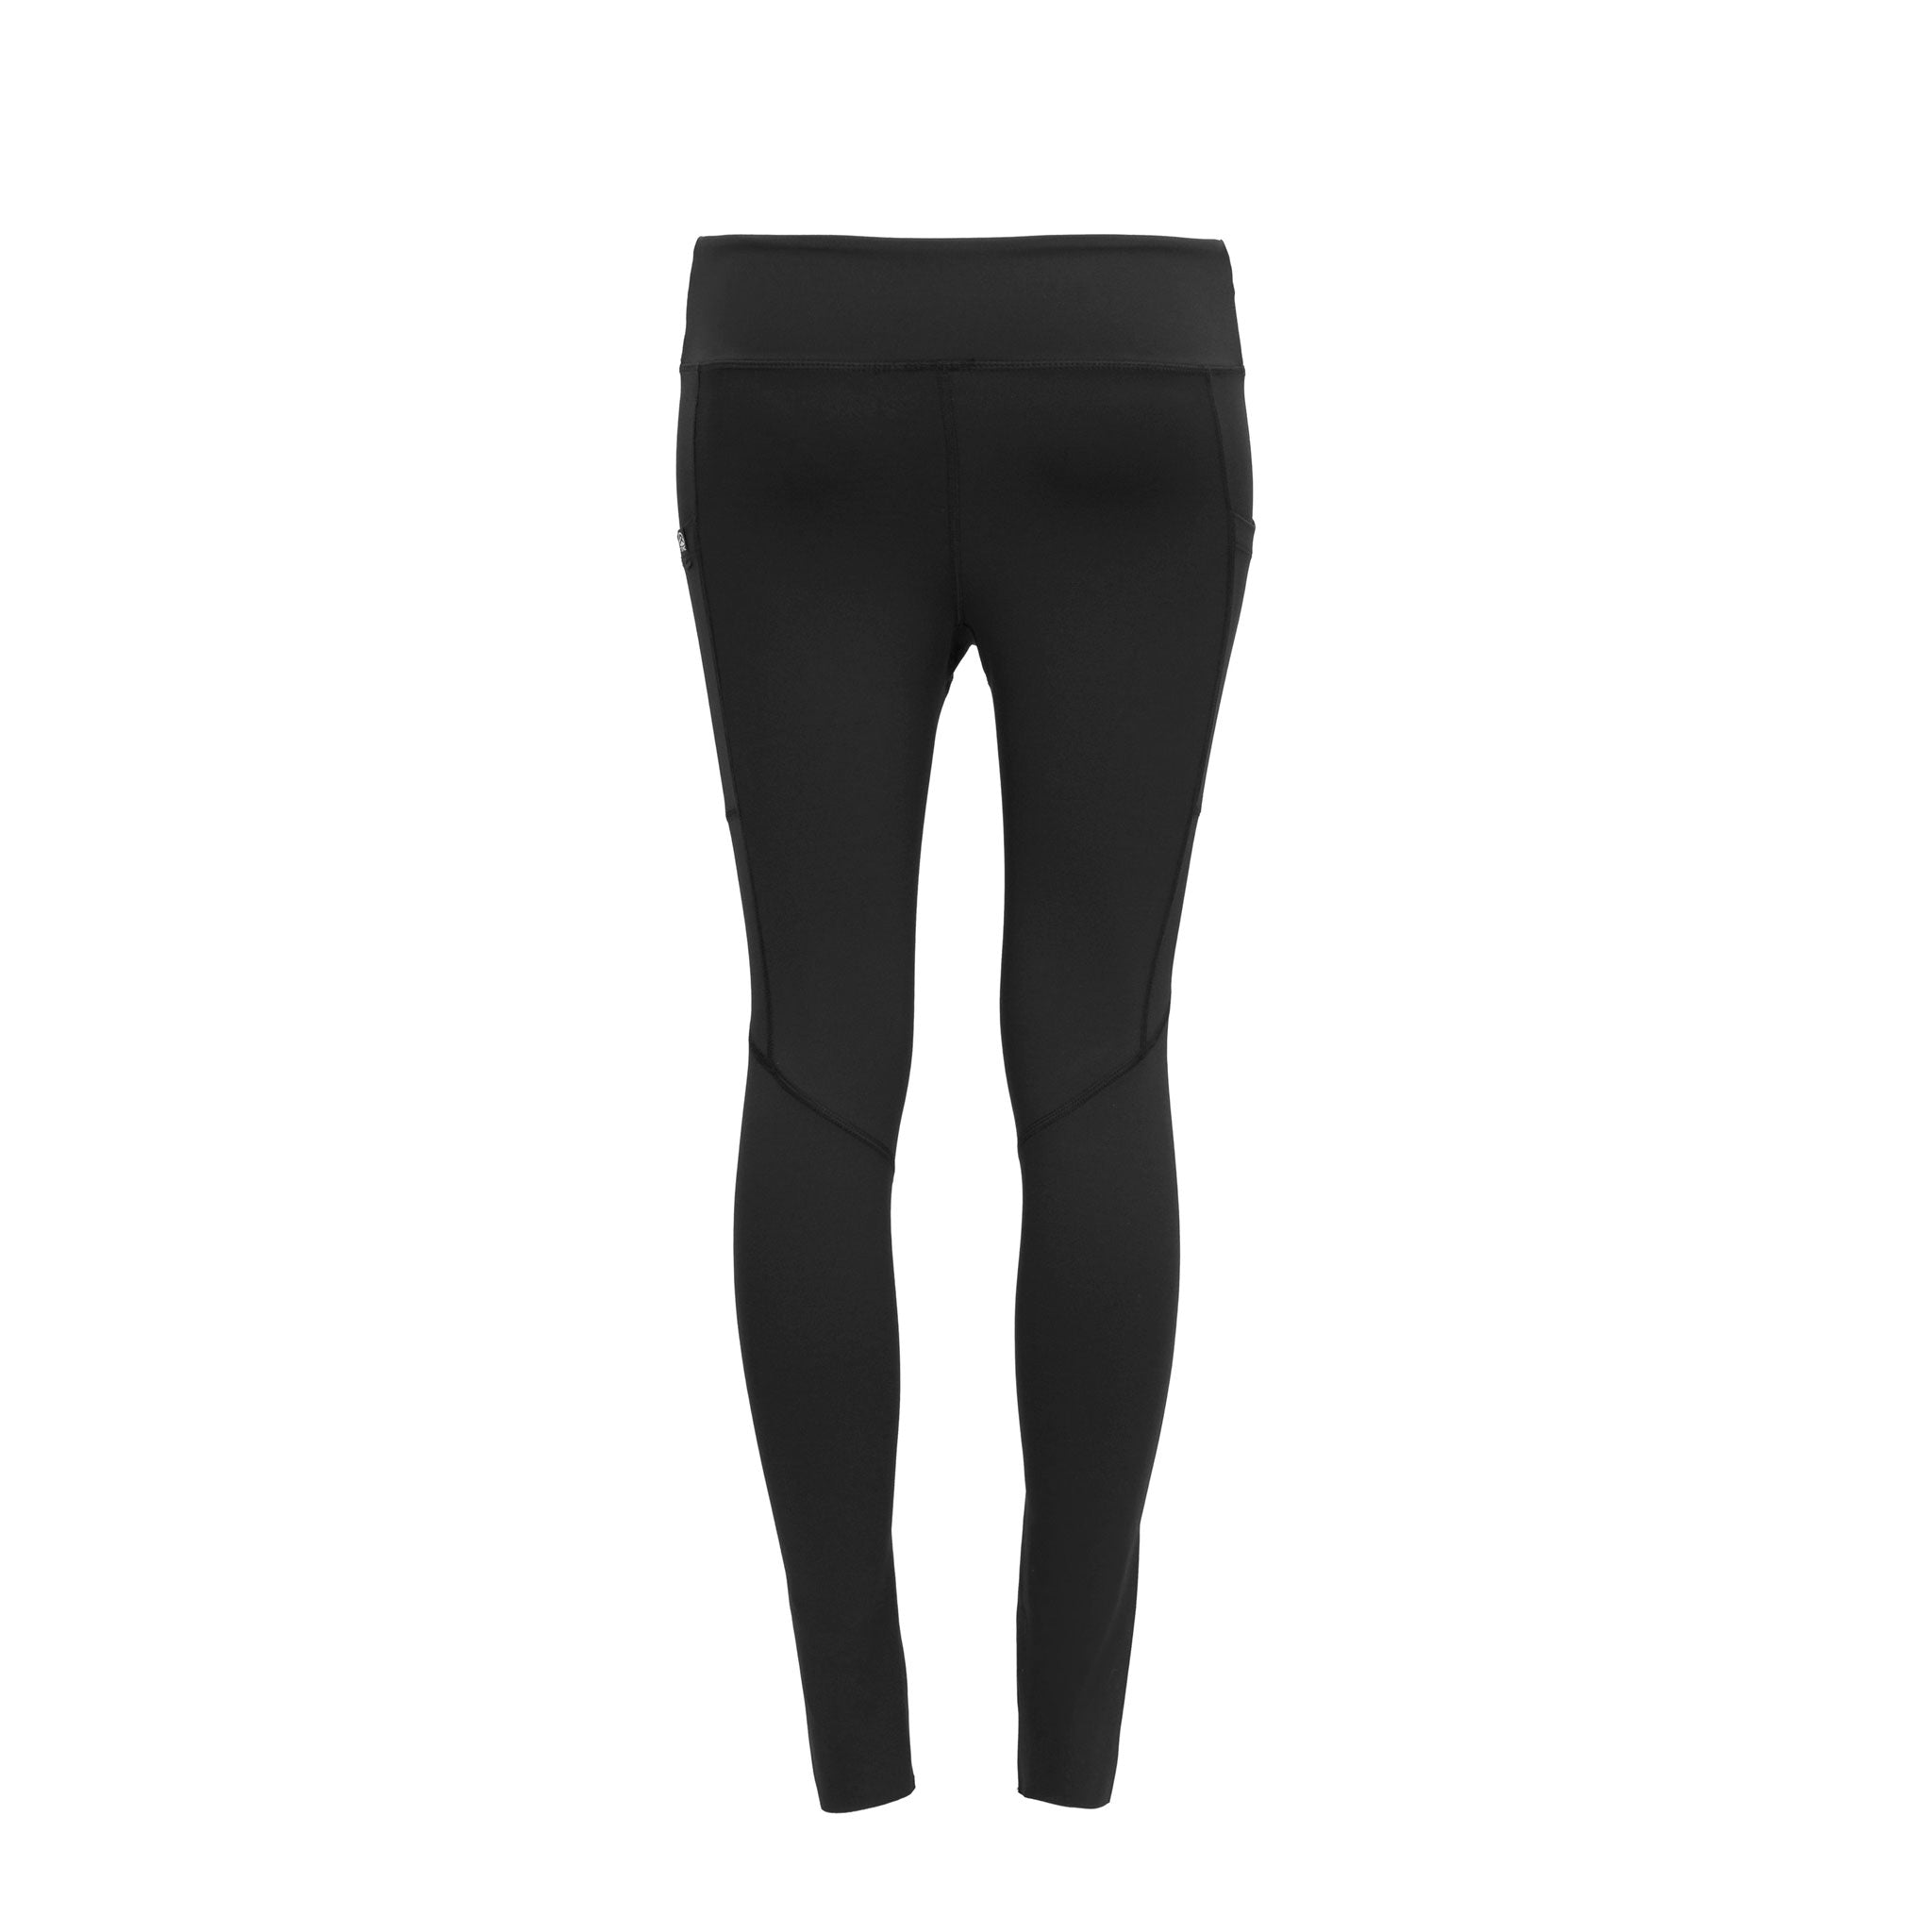 sync-performance-women's-compression-3/4-leggings-black-pink-back